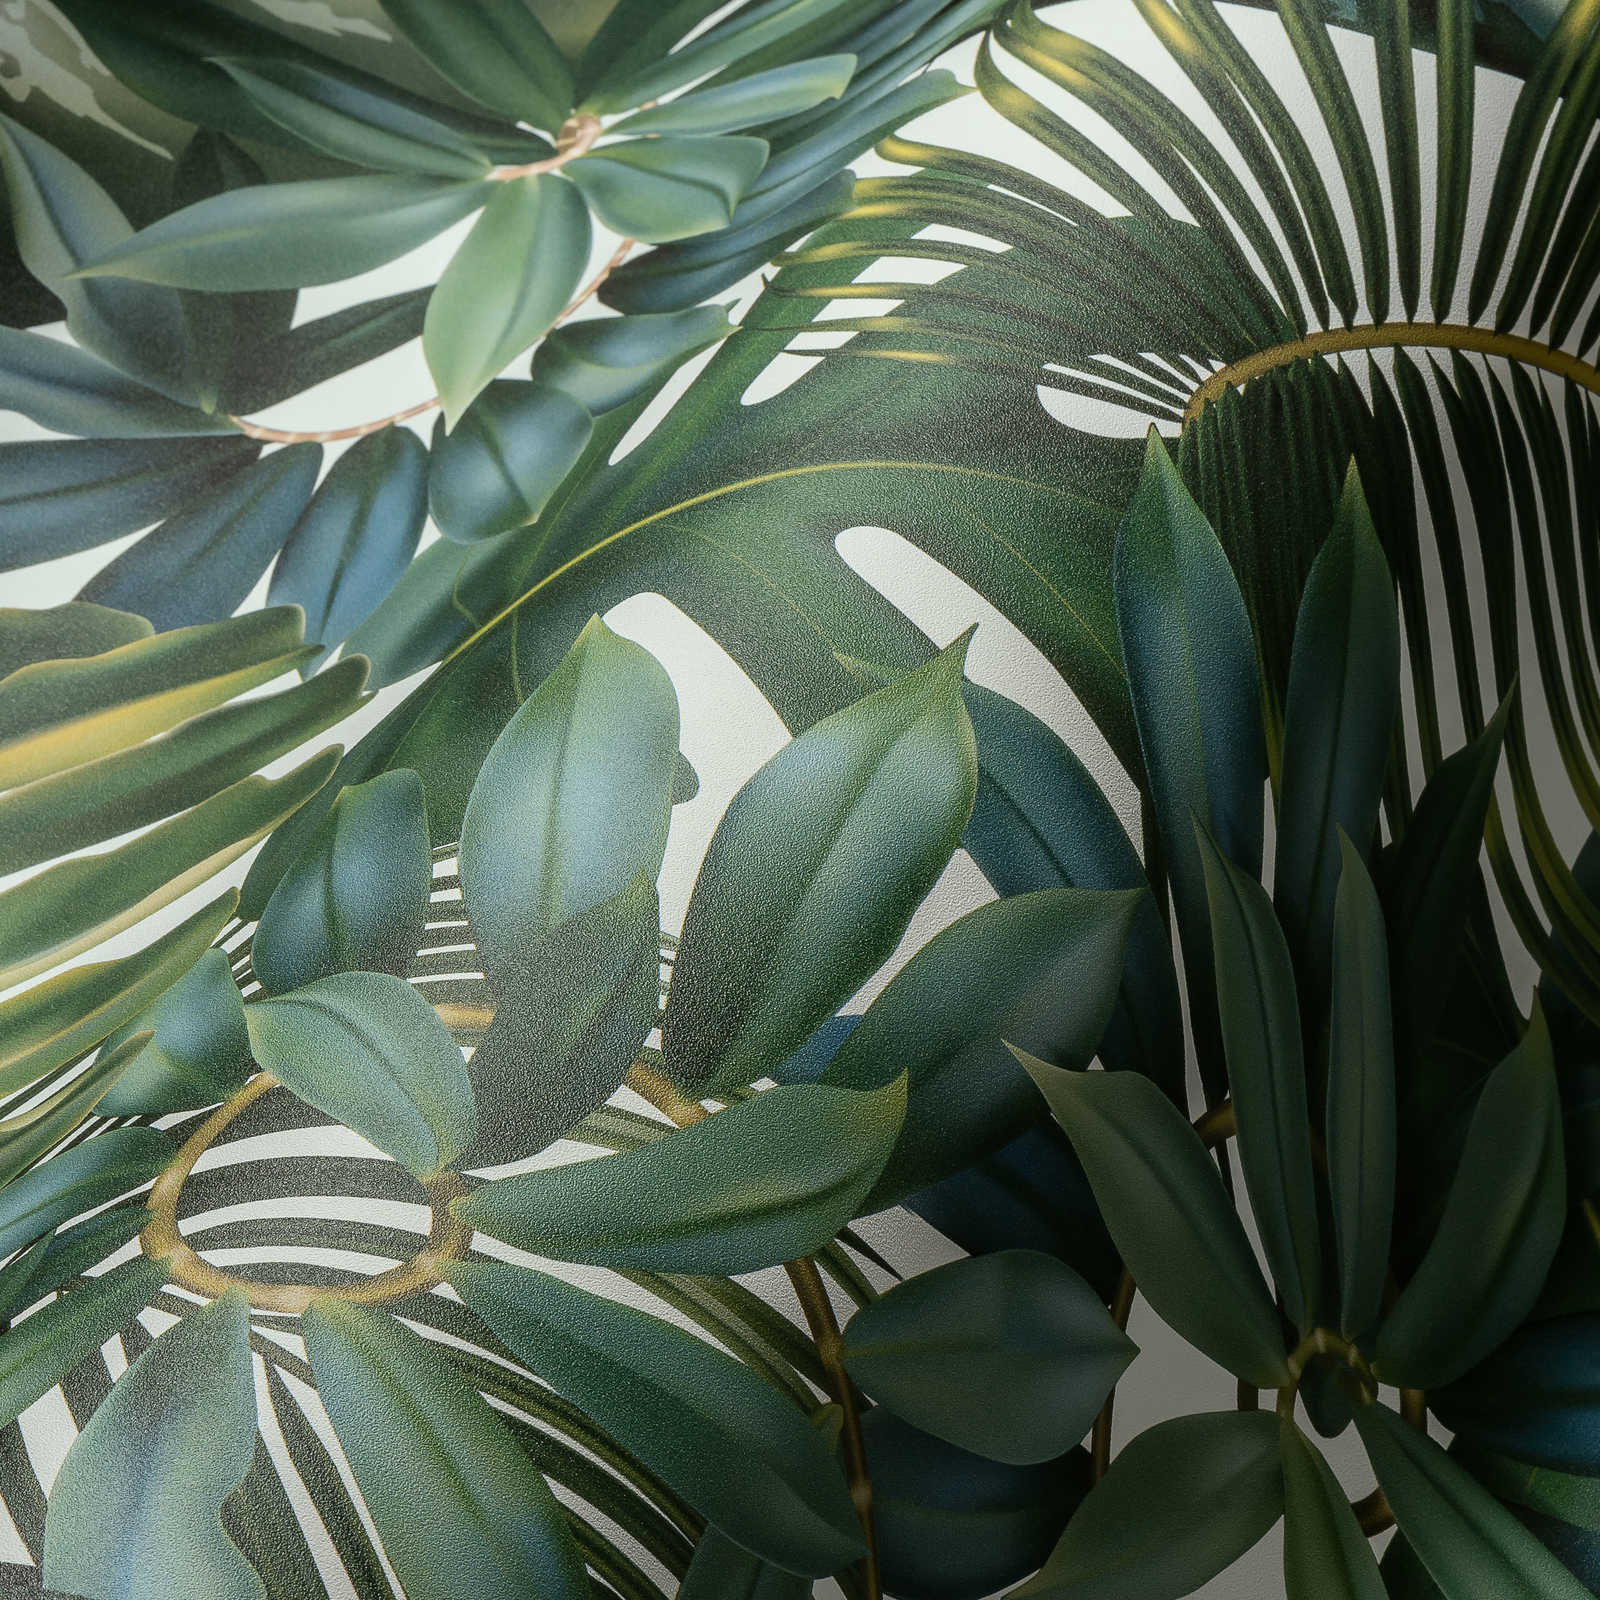             Blätter-Tapete Dschungel Muster – Grün, Creme
        